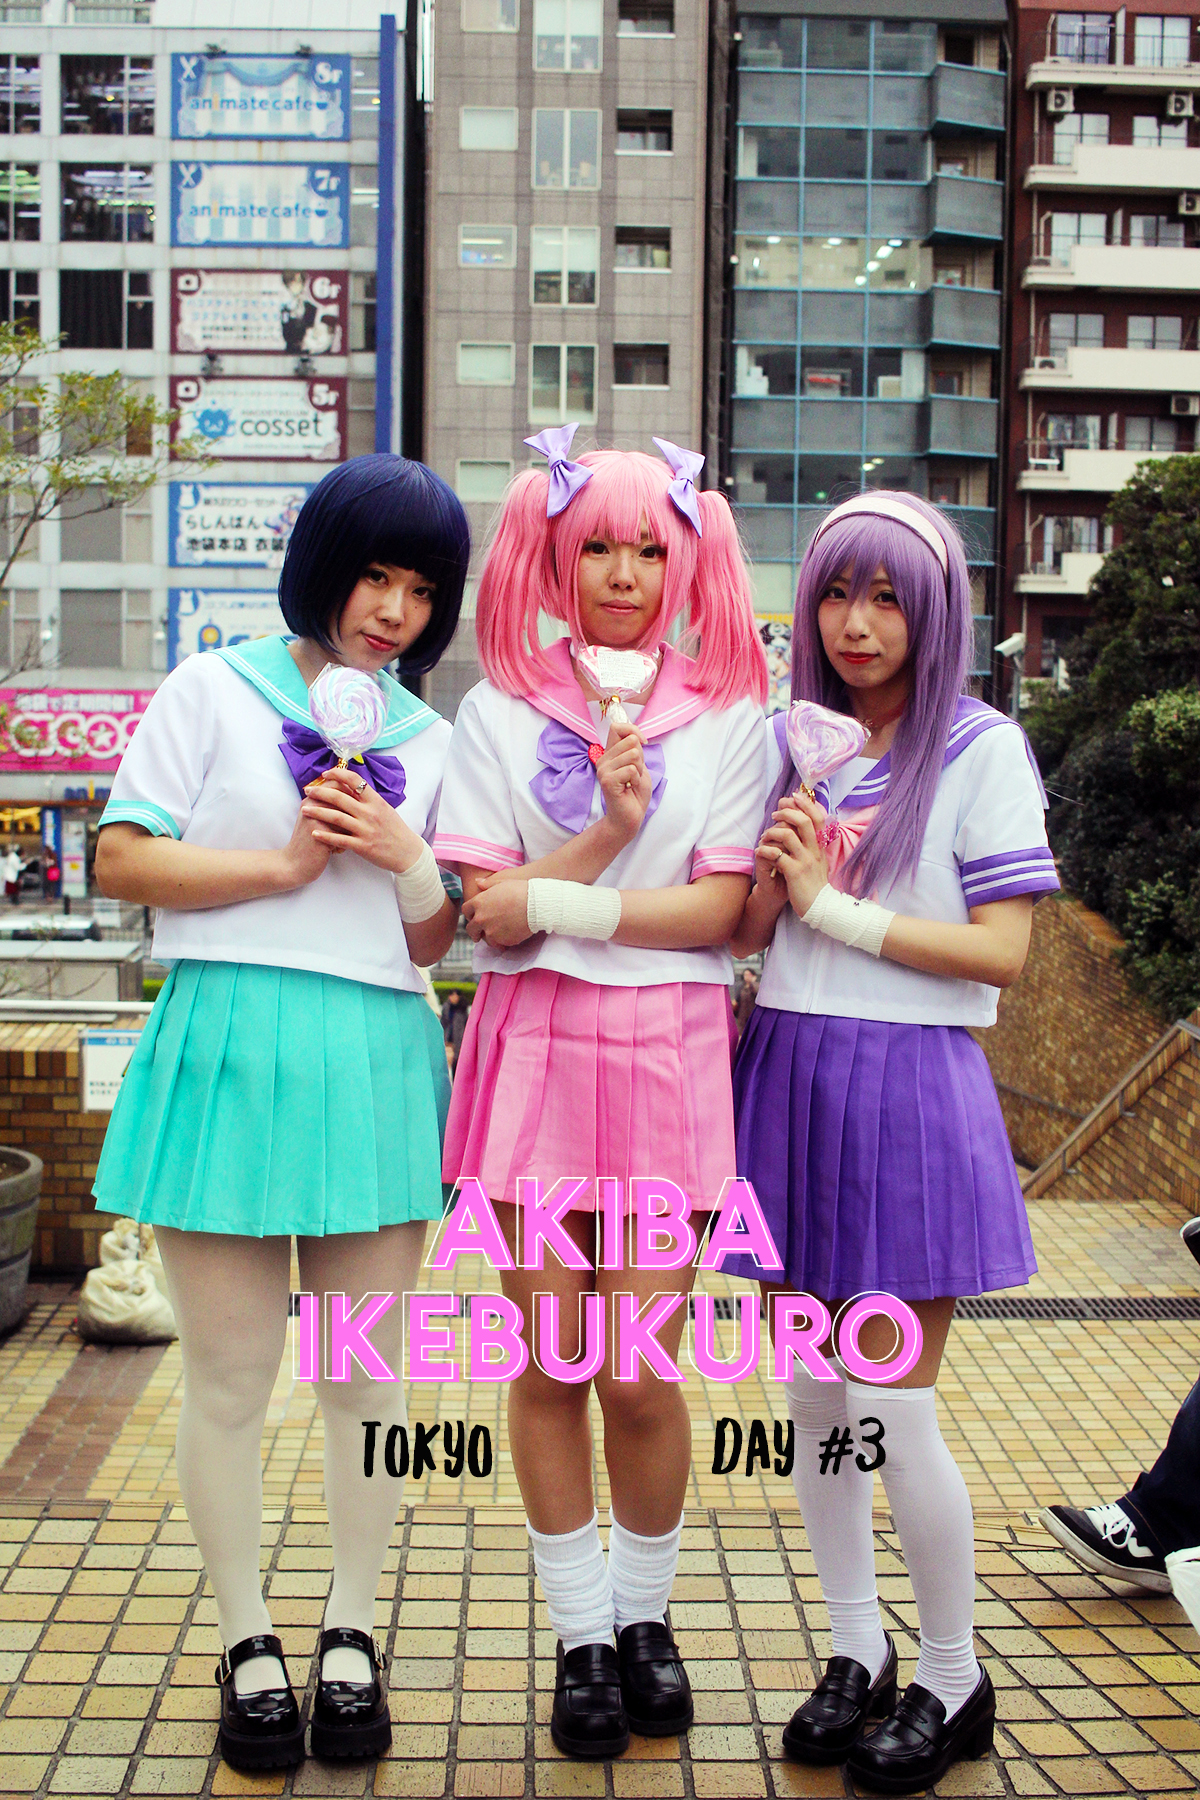 Tokyo mon carnet d’adresses #day 3 Akiba et Ikebukuro